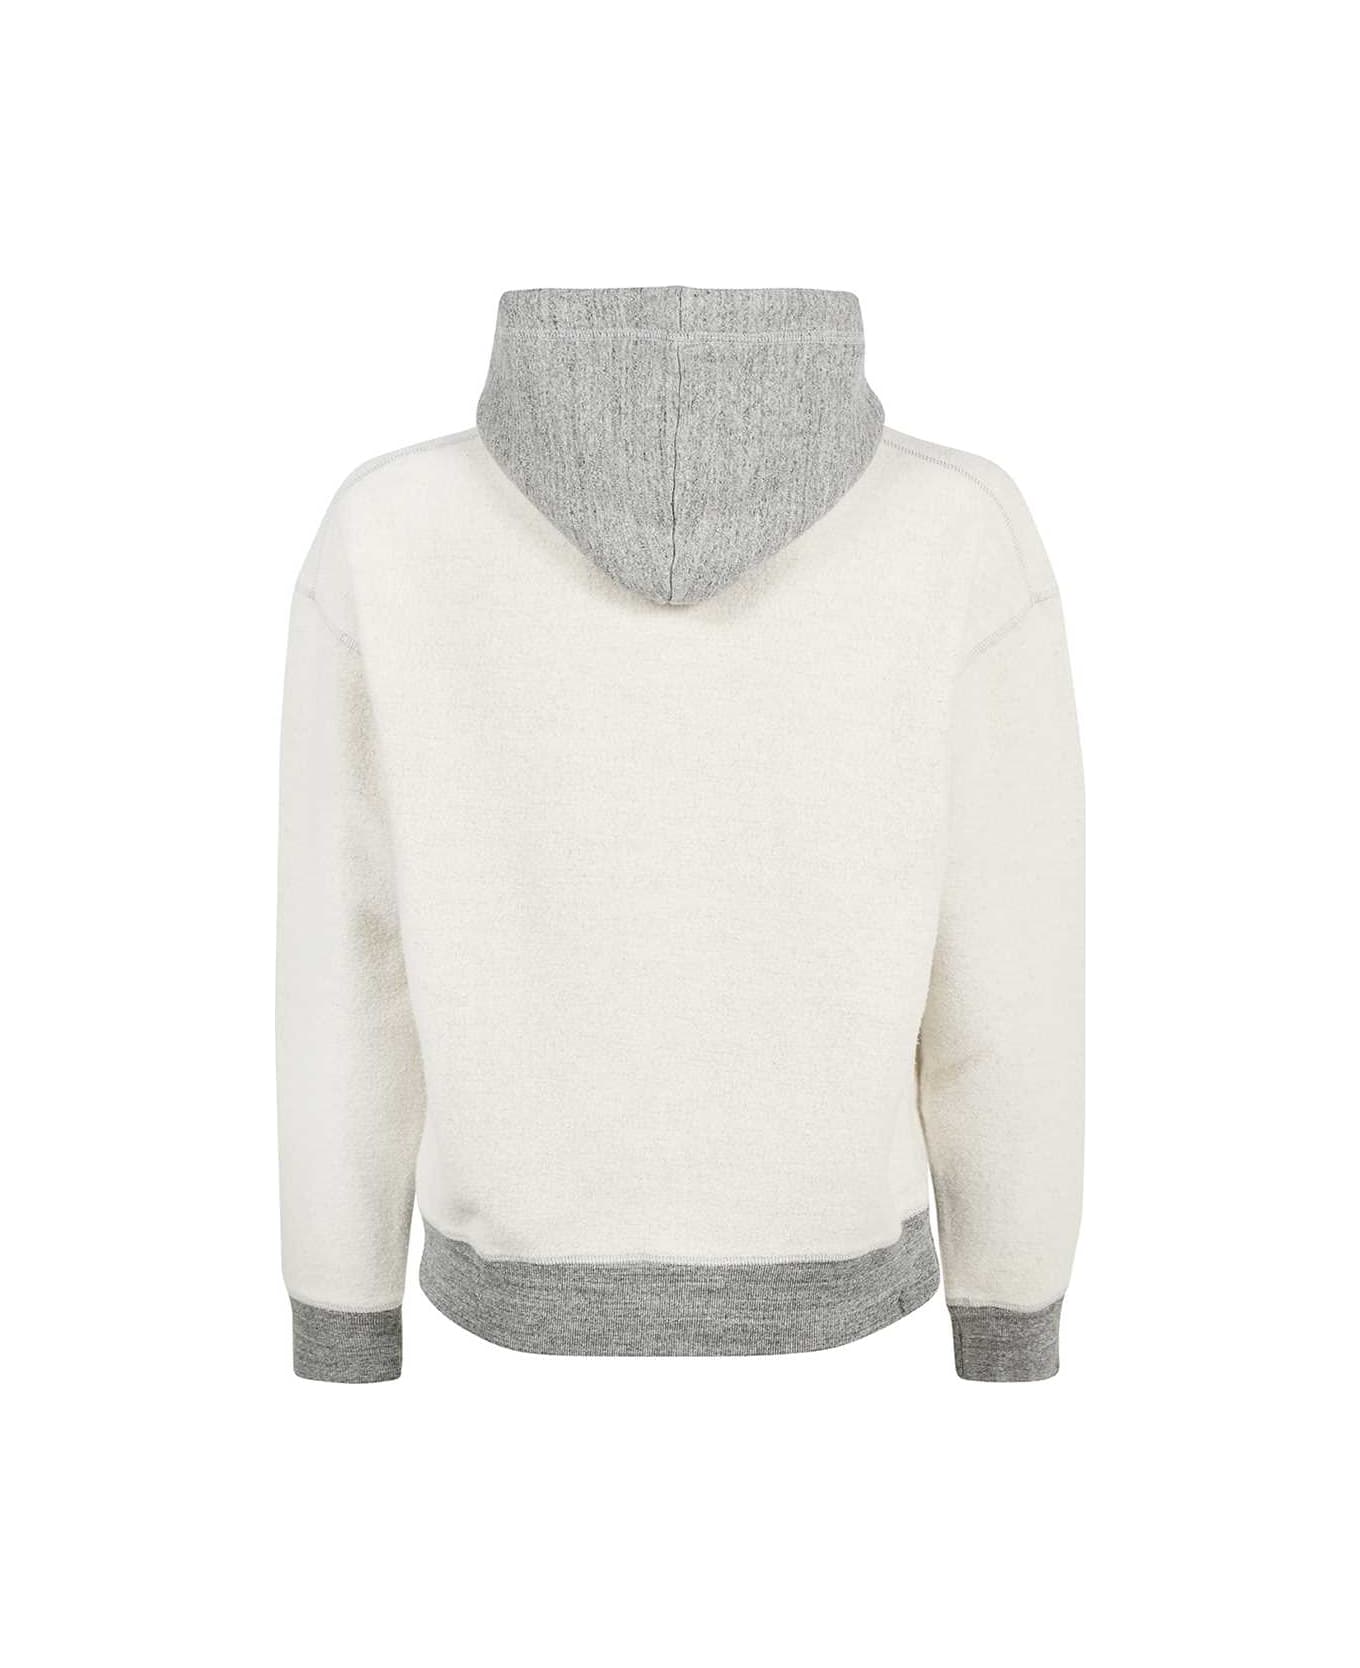 Dsquared2 Hooded Sweatshirt - grey